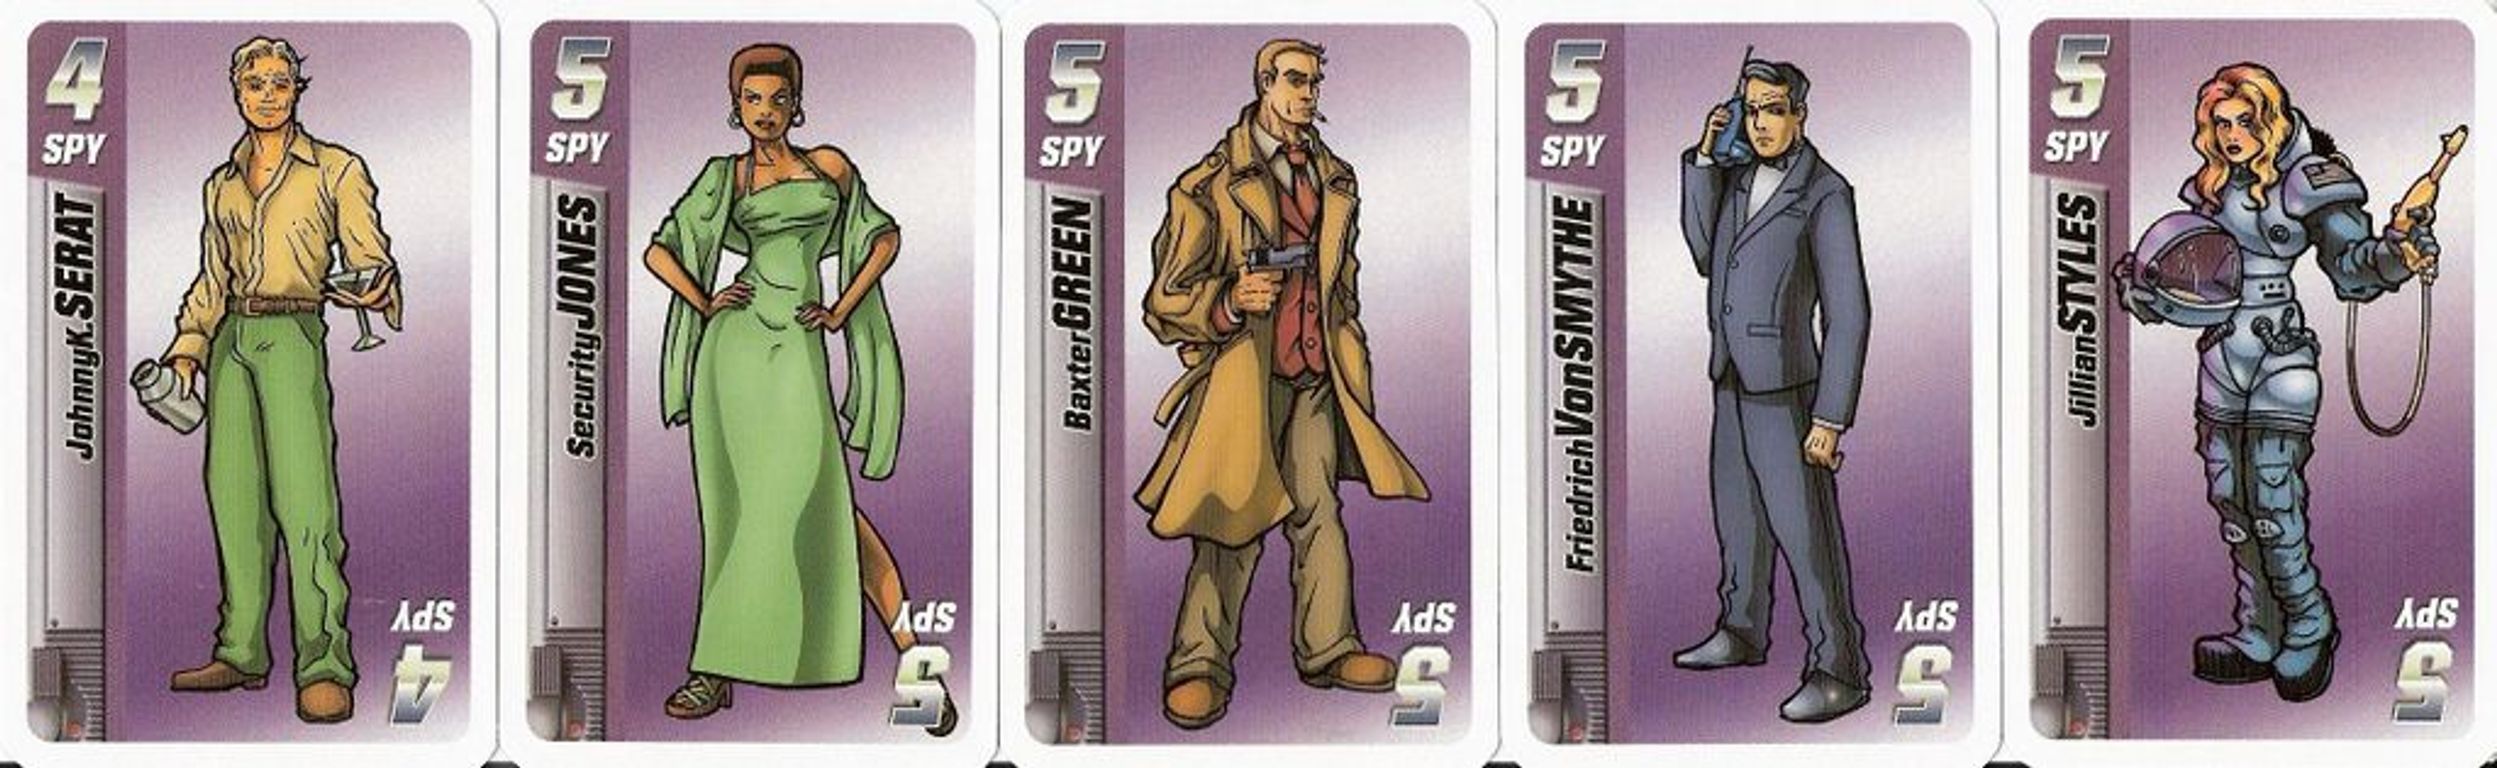 Before I Kill You, Mister Spy... cards